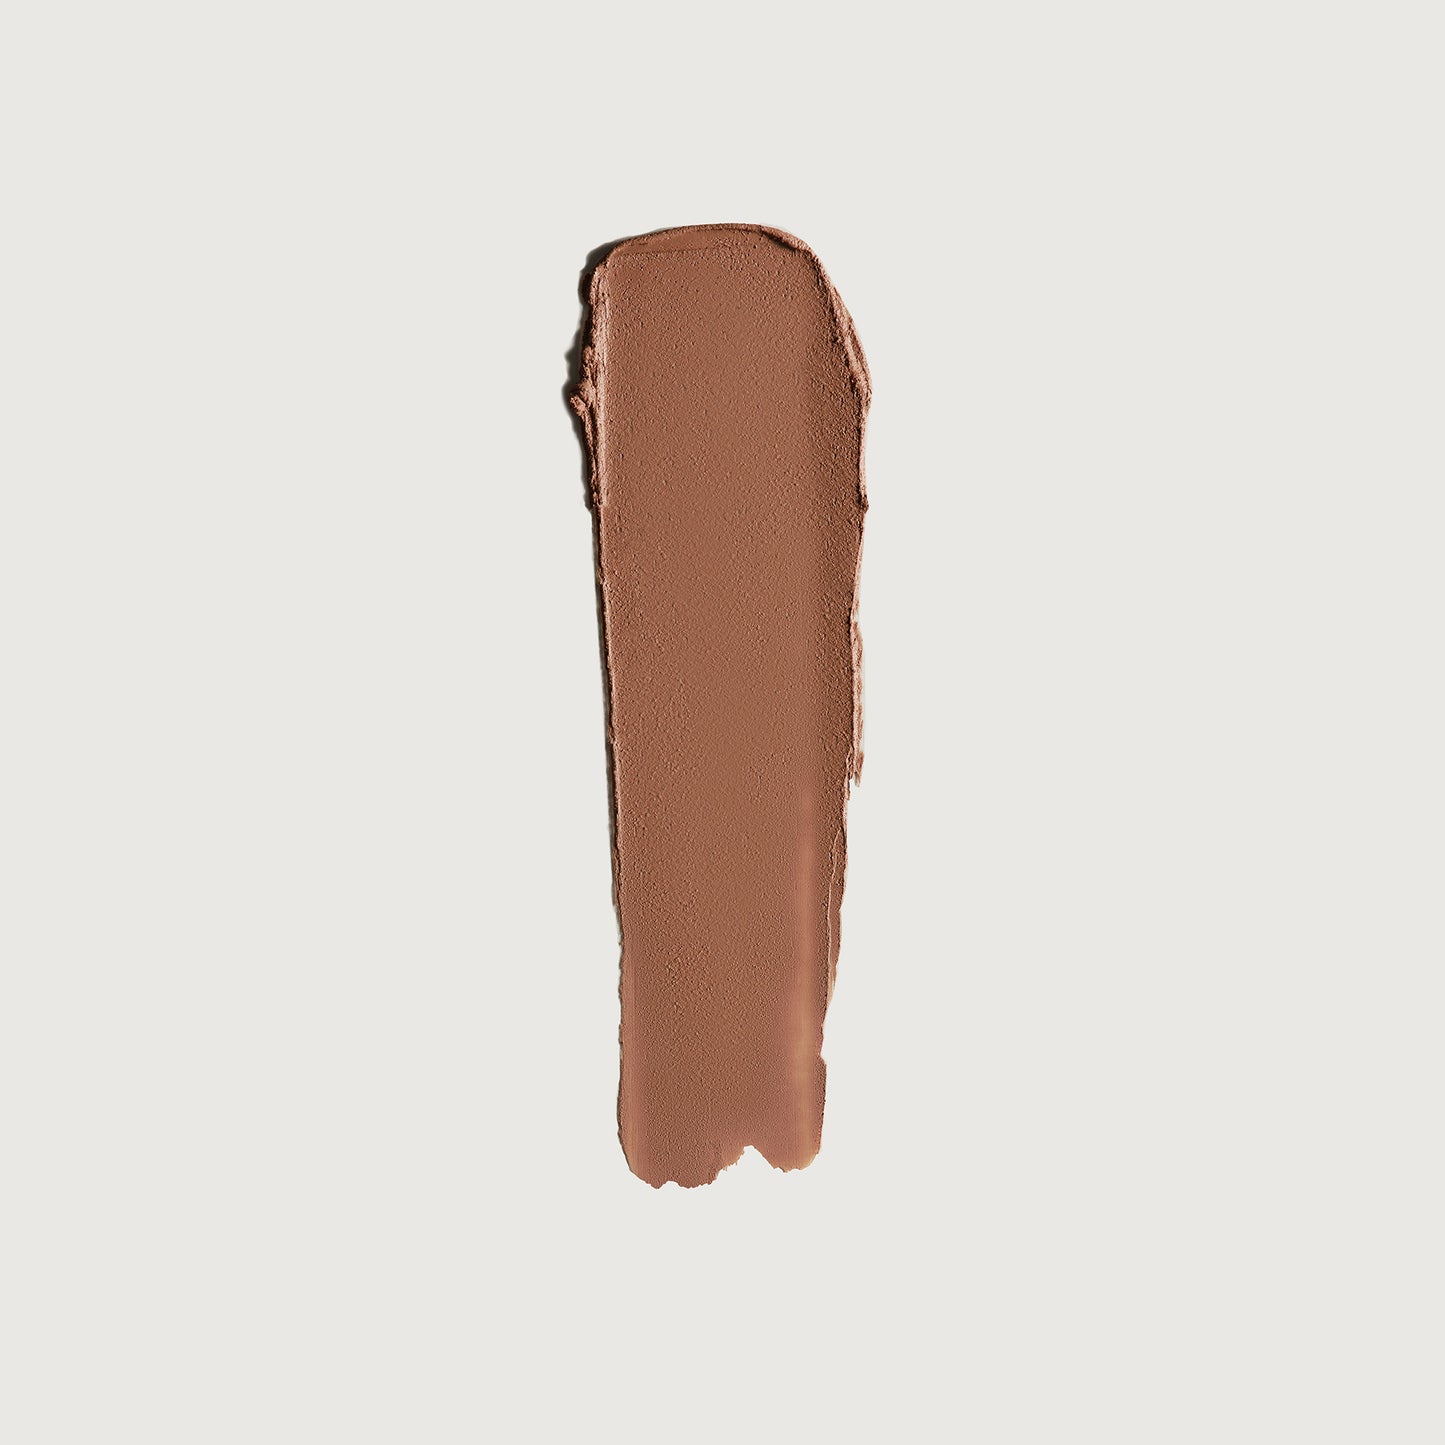 MERIT | Solo Shadow Cream-to-Powder Soft Matte Eyeshadow